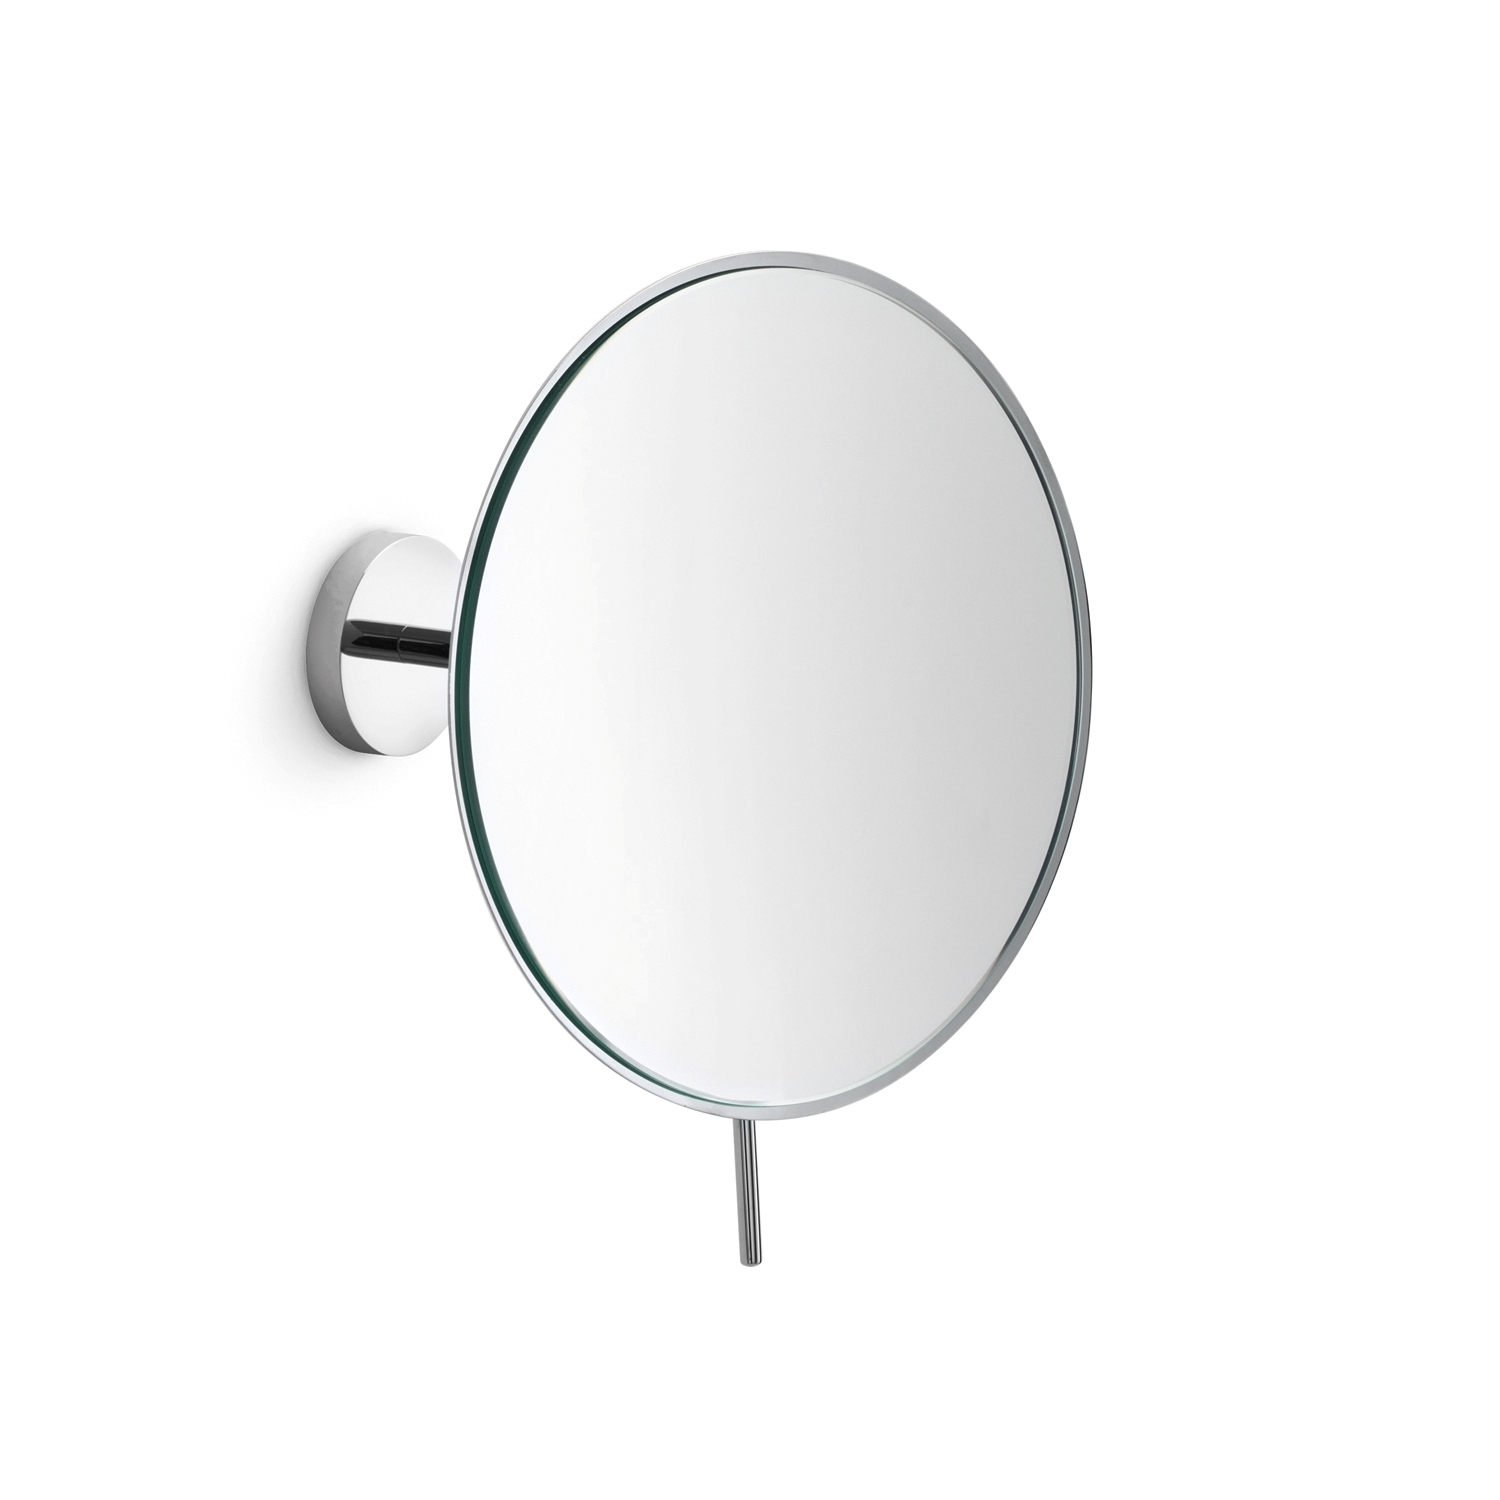 Mevedo 55963 Magnifying Mirror